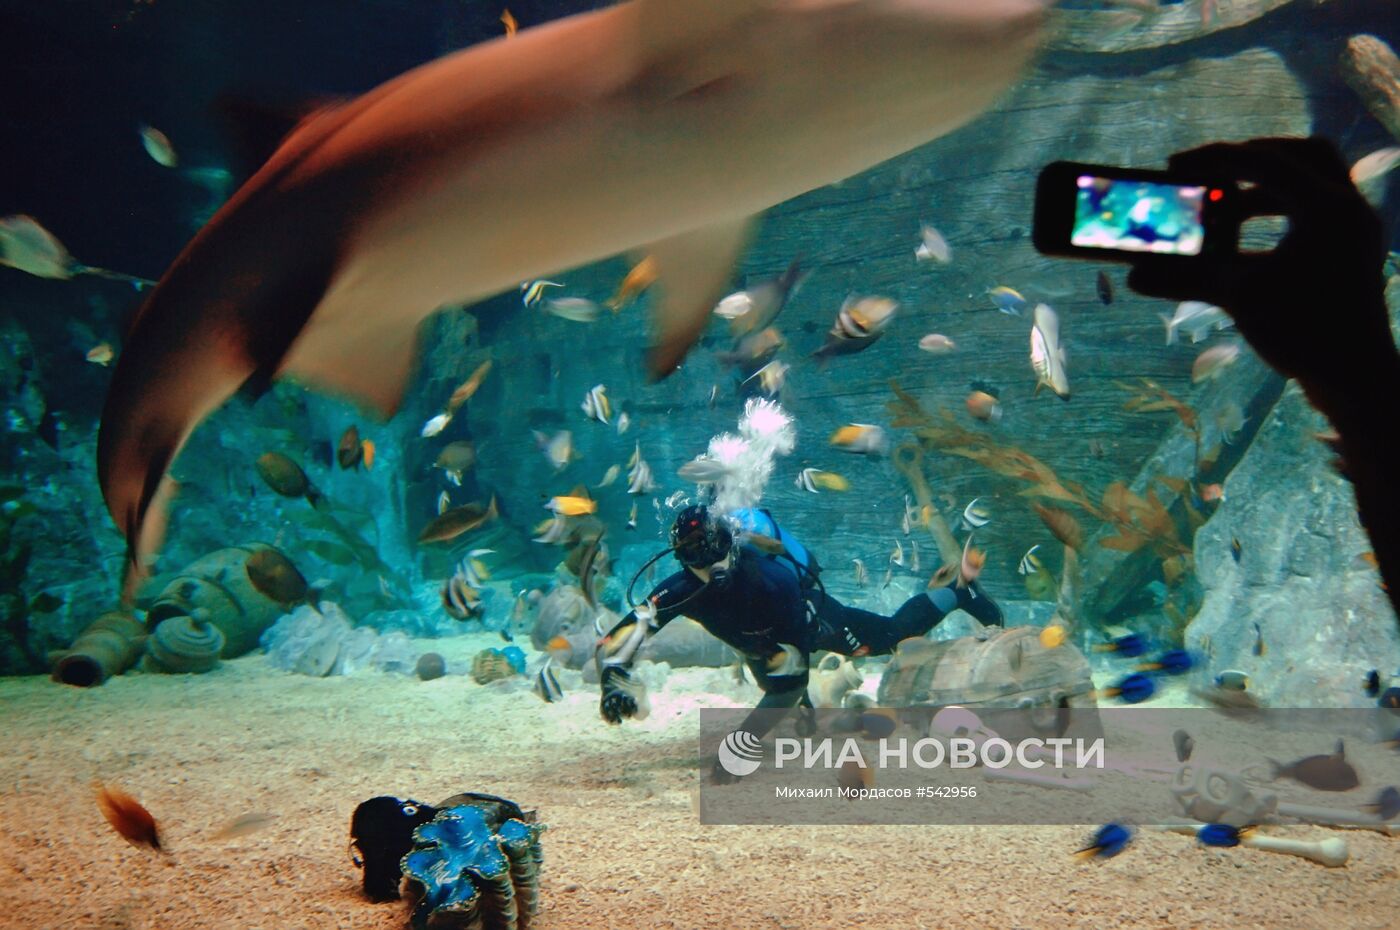 Открытие океанариума "Sоchi Discovery World" в Сочи